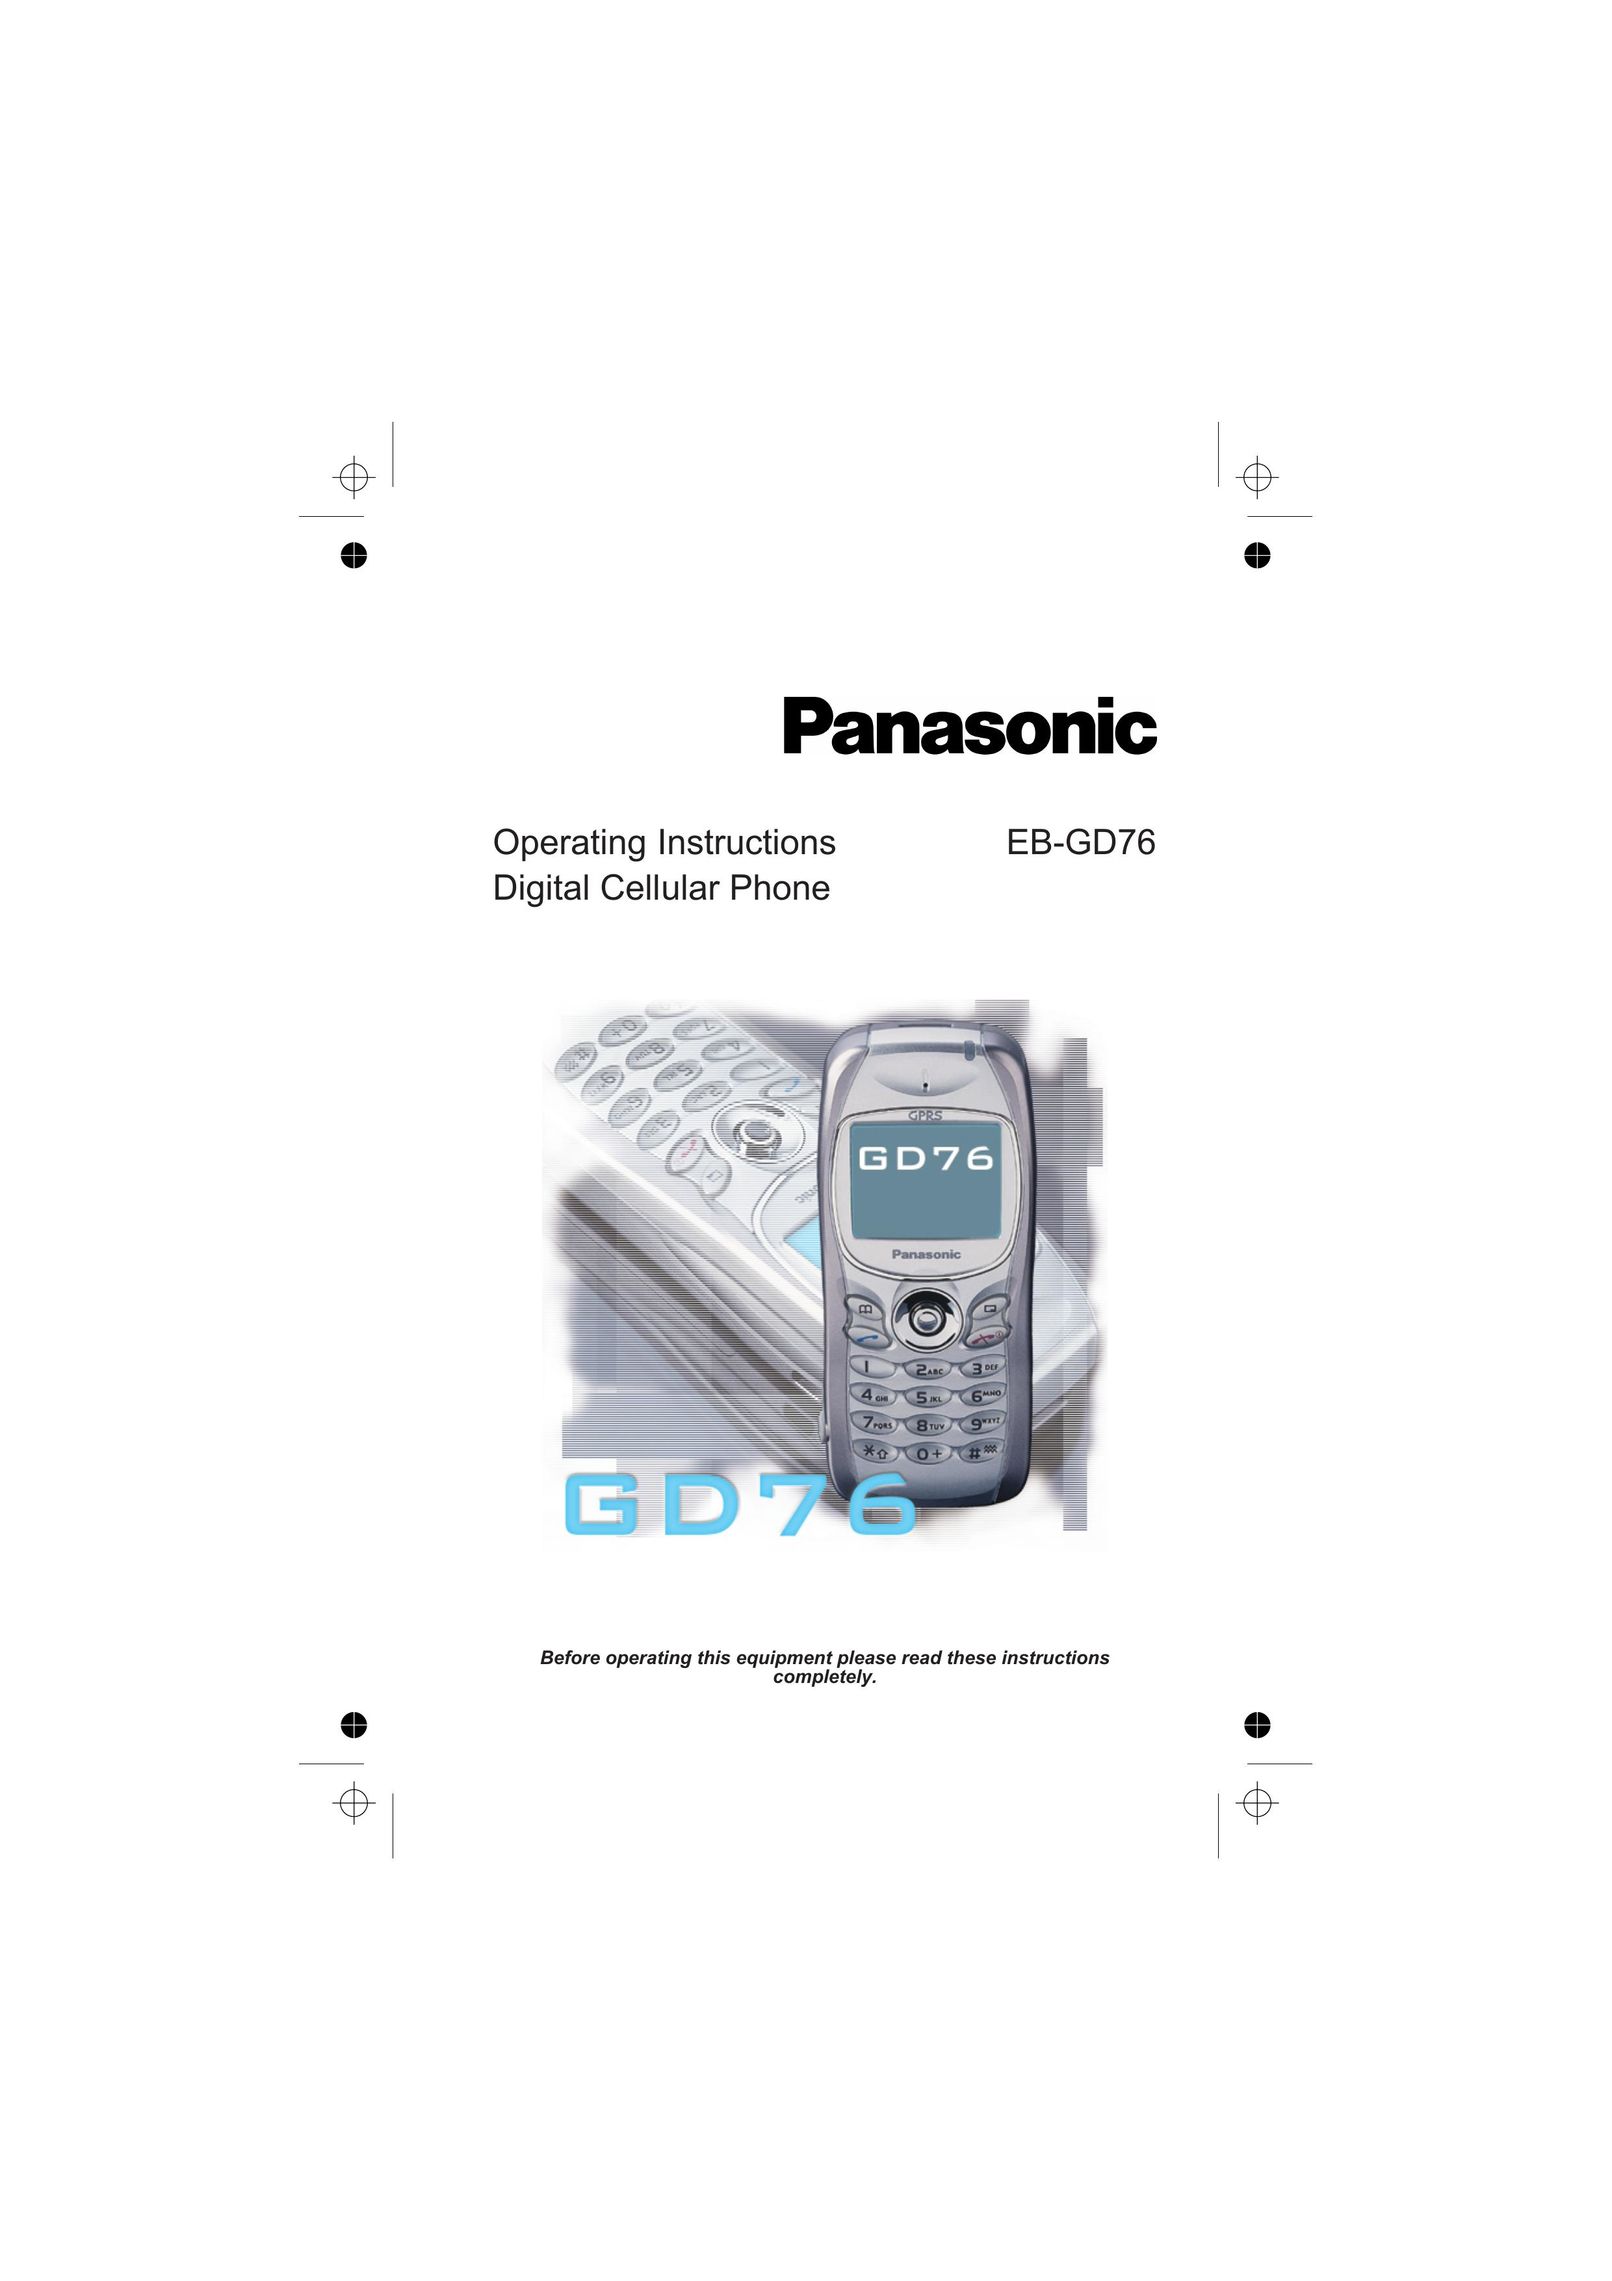 Panasonic EB-GD76 Cell Phone User Manual